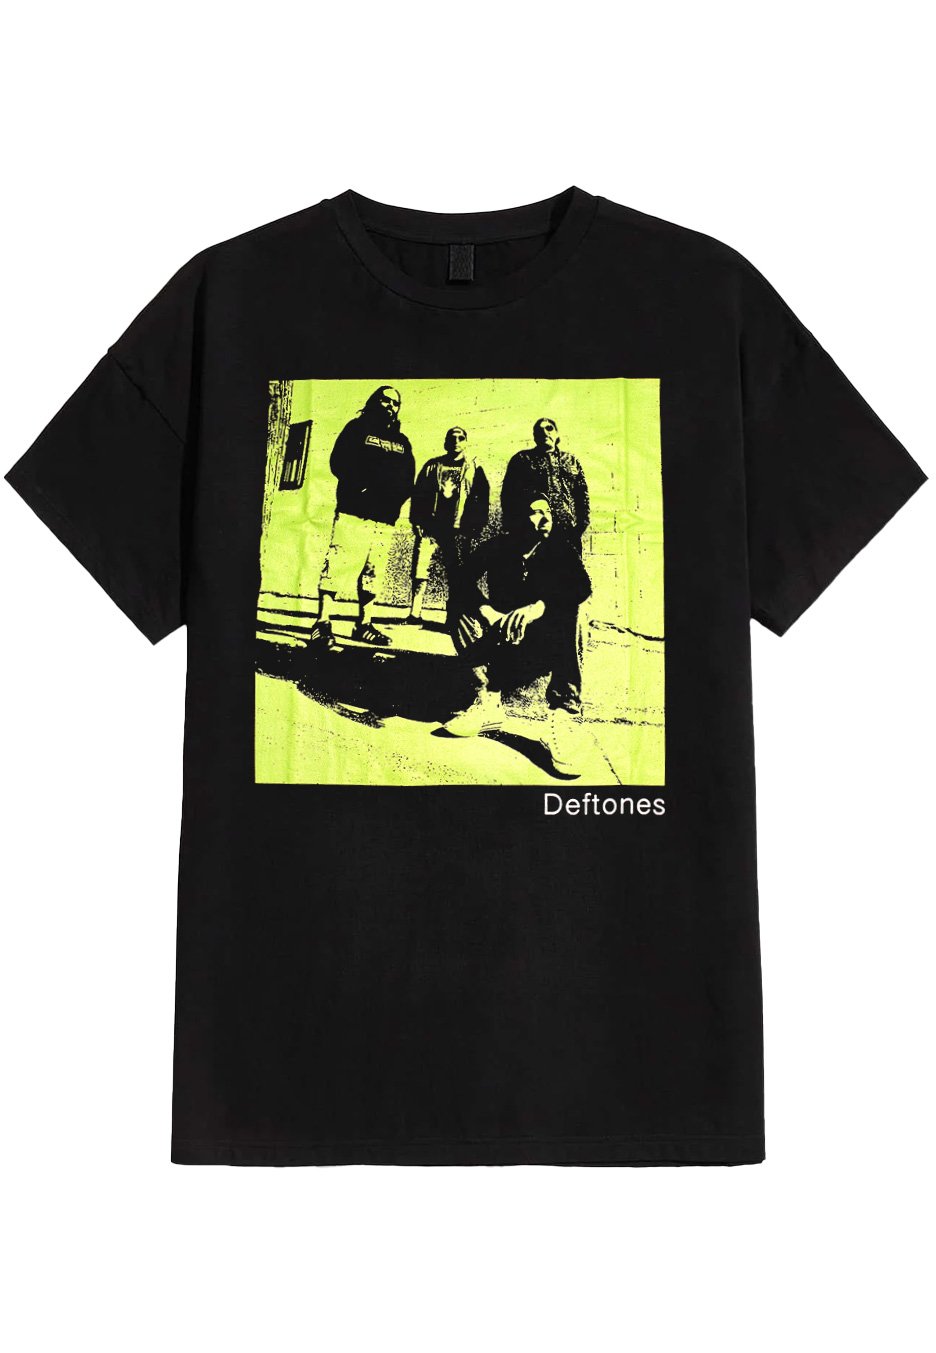 Deftones - Band Photo Beyond - T-Shirt